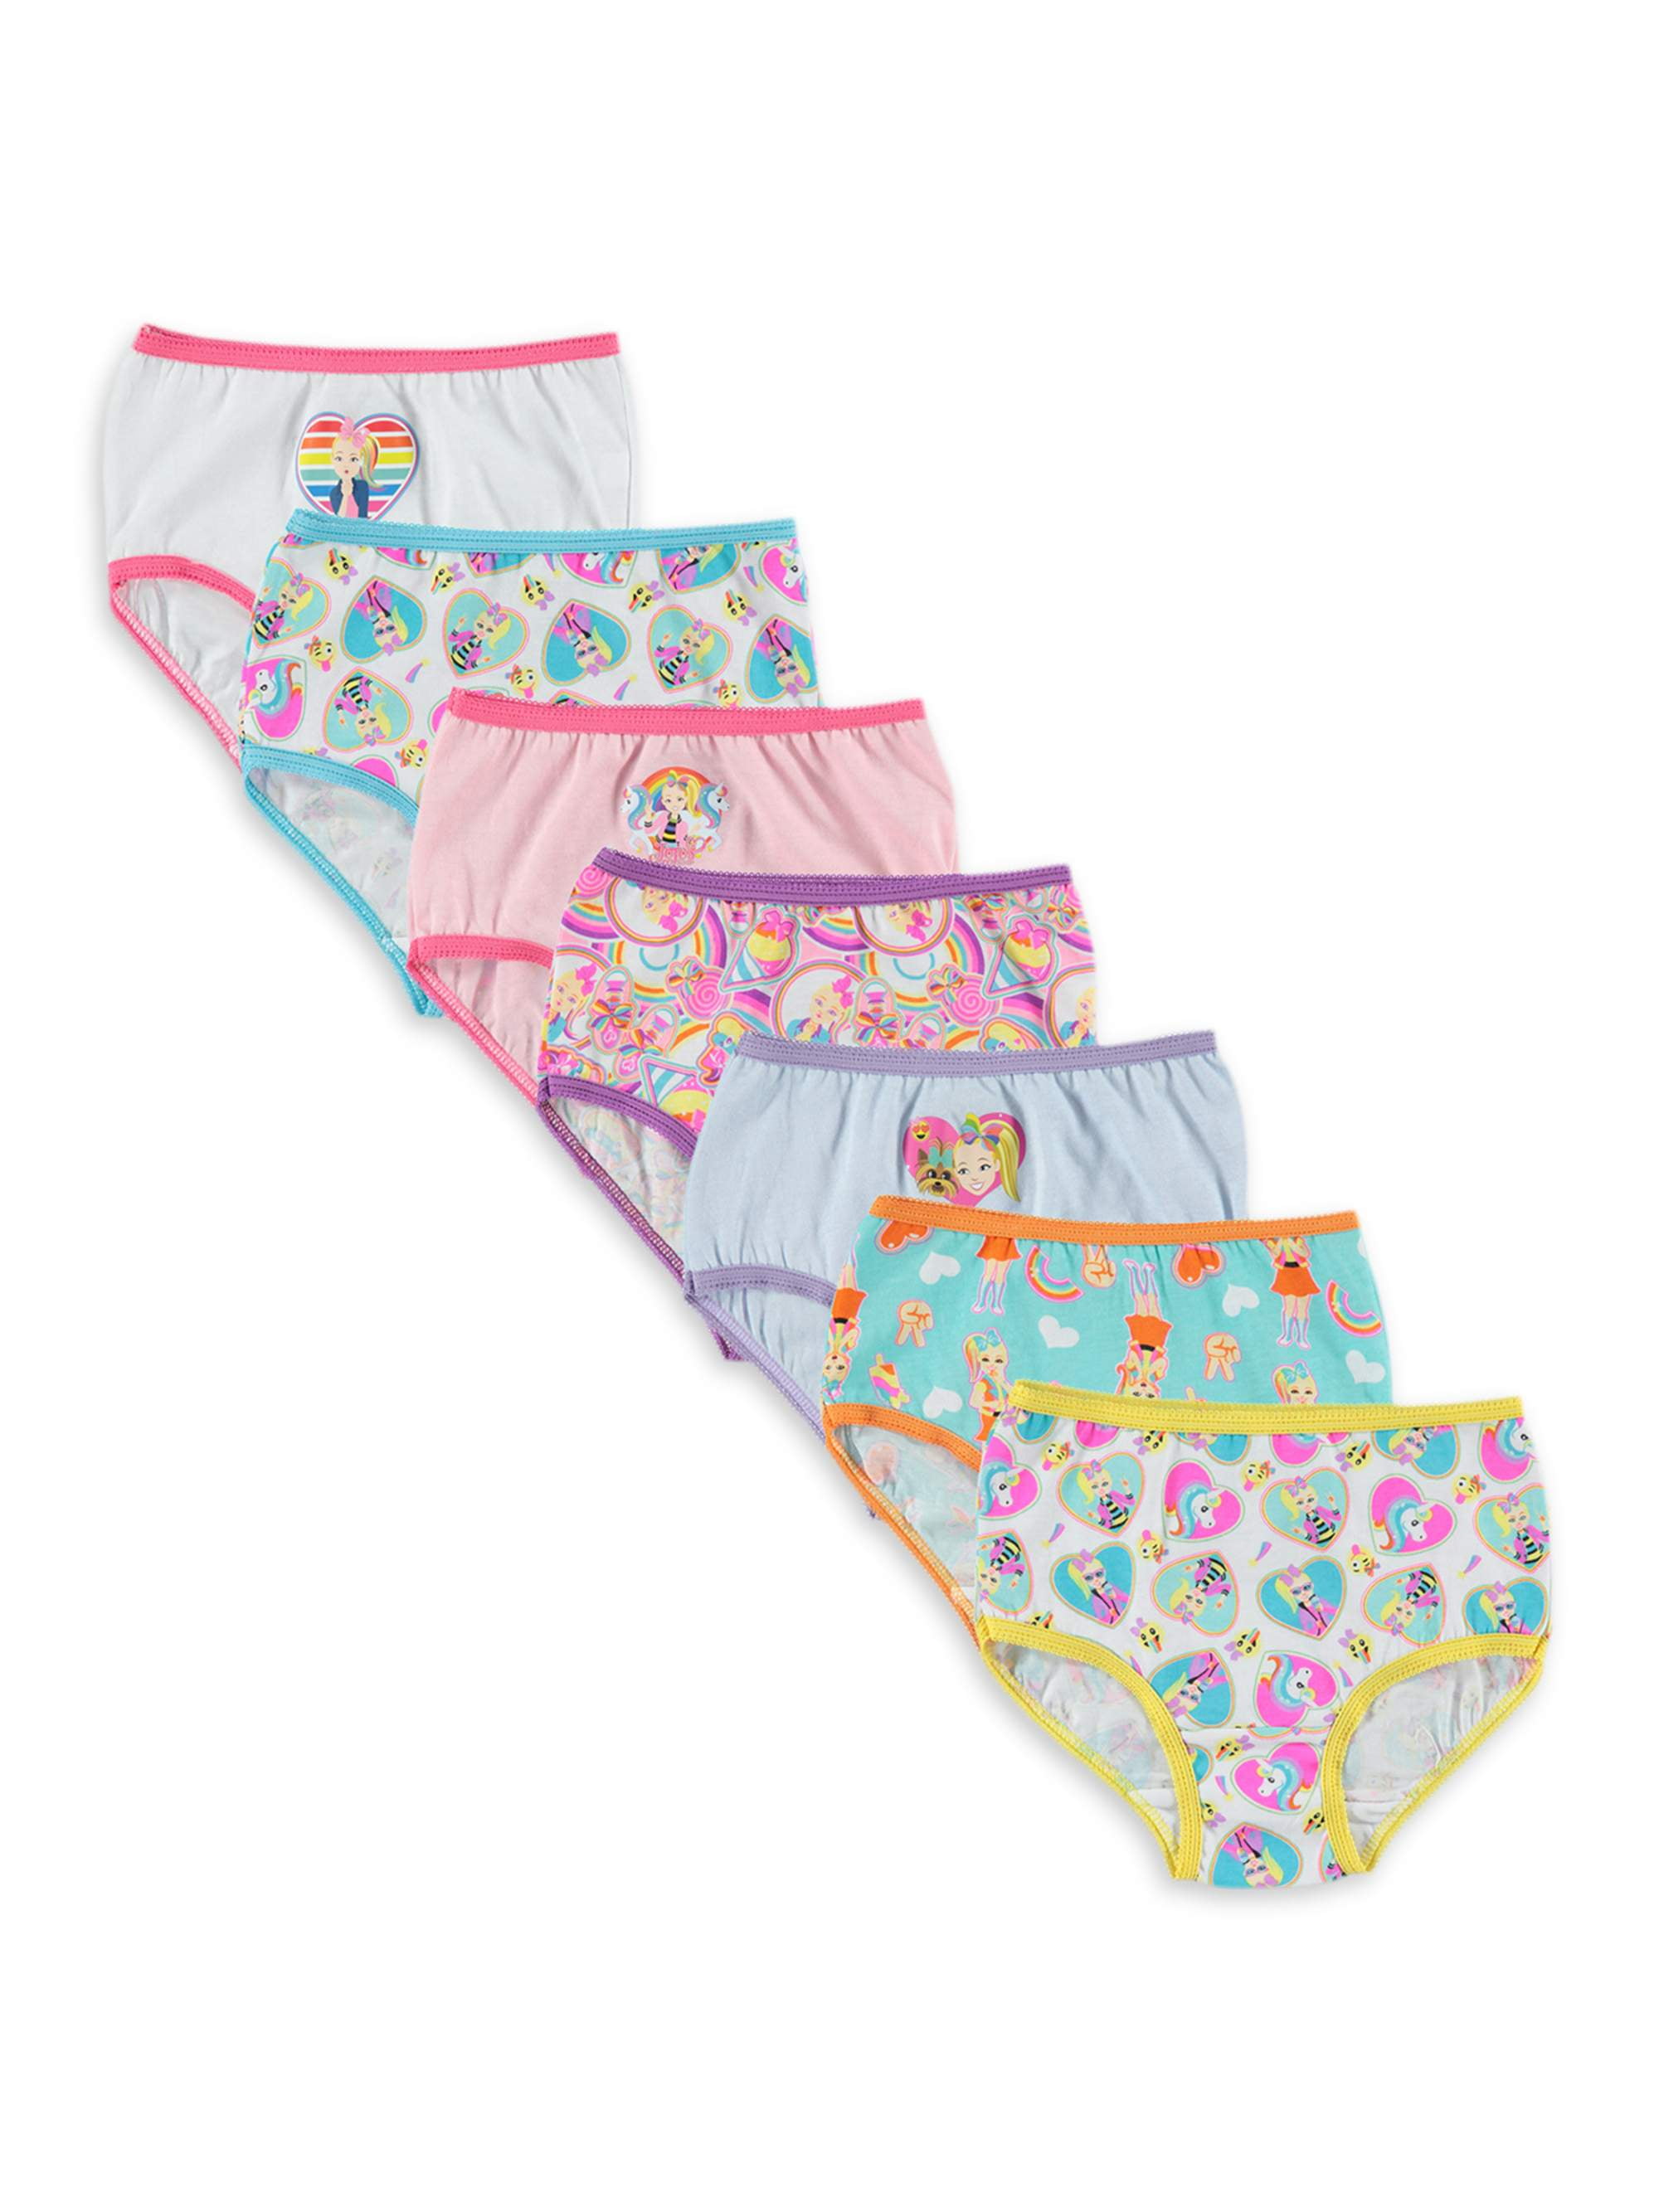 PJ Masks Girls 7-Pack Brief Bikini Panty Toddler Underwear, PJ7pk